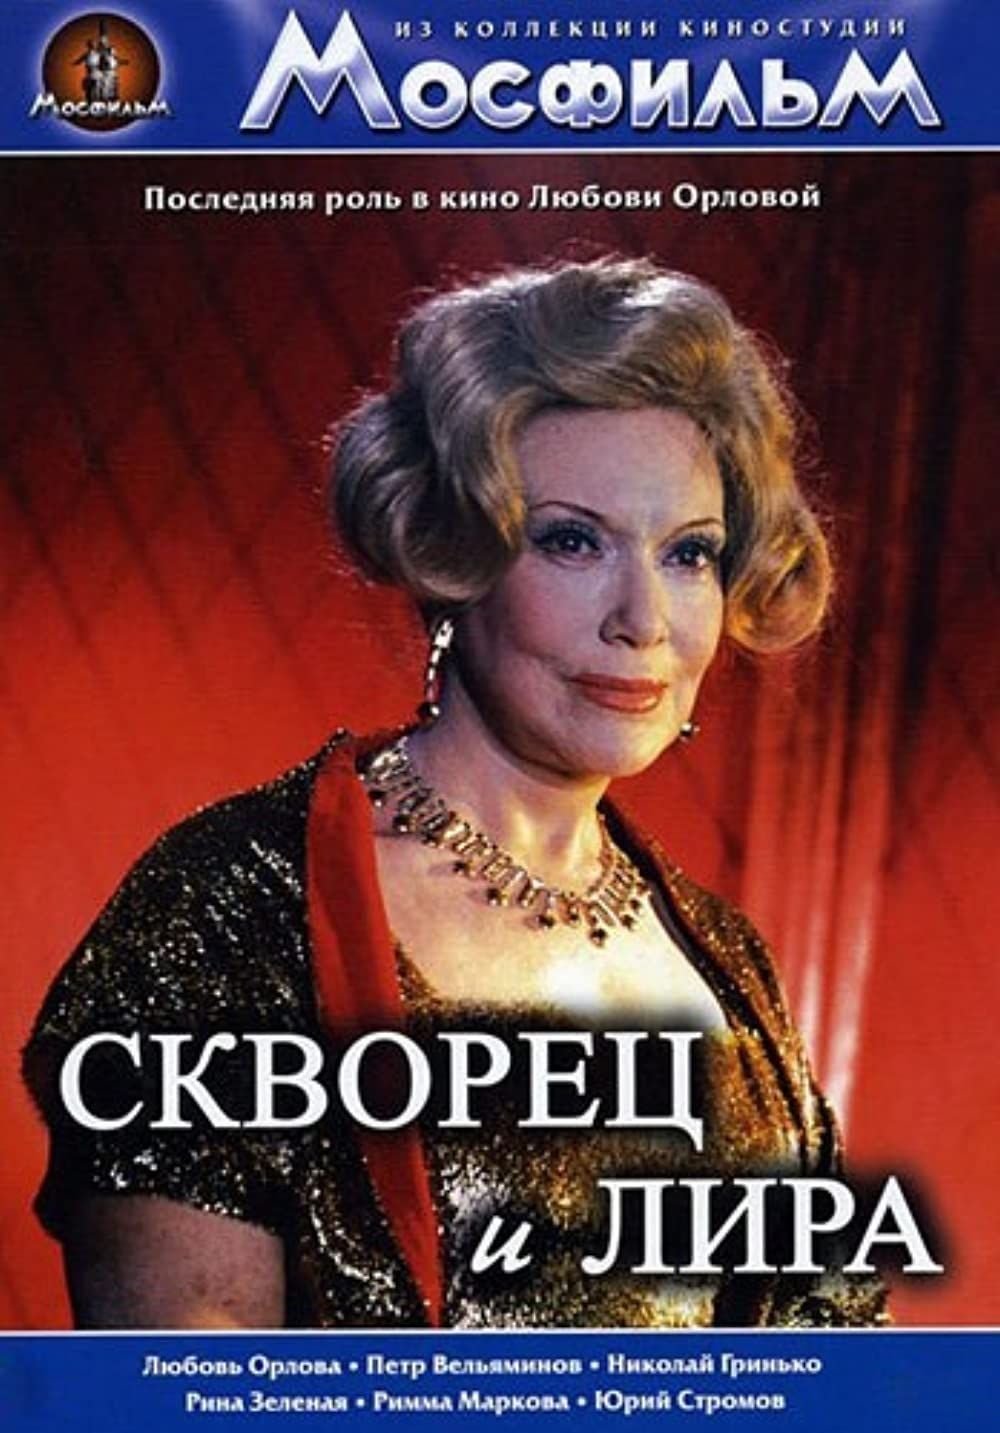 Скворец и Лира фильм 1974 Орлова